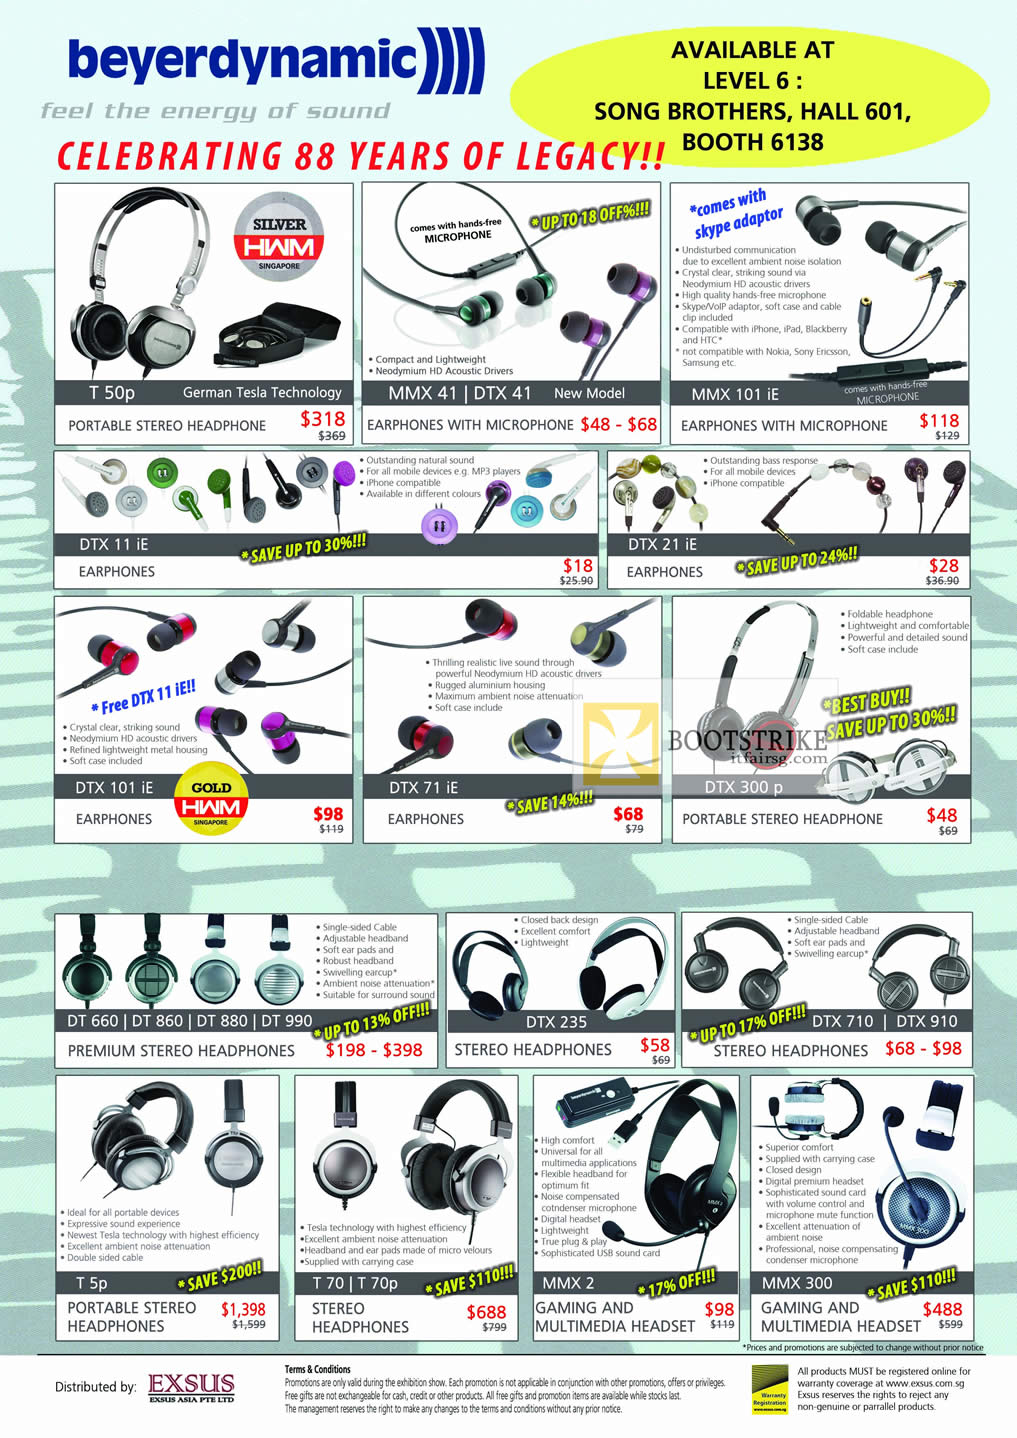 COMEX 2012 price list image brochure of Song Brothers Beyer Dynamic Headphones T50p, MMX 41, 101iE, DTX 41, 101 IE, 71 IE, DTX 235, 710, 910, DT660, DT860, DT880, DT990, T 5p, T70, T70p, MMX 2, 300